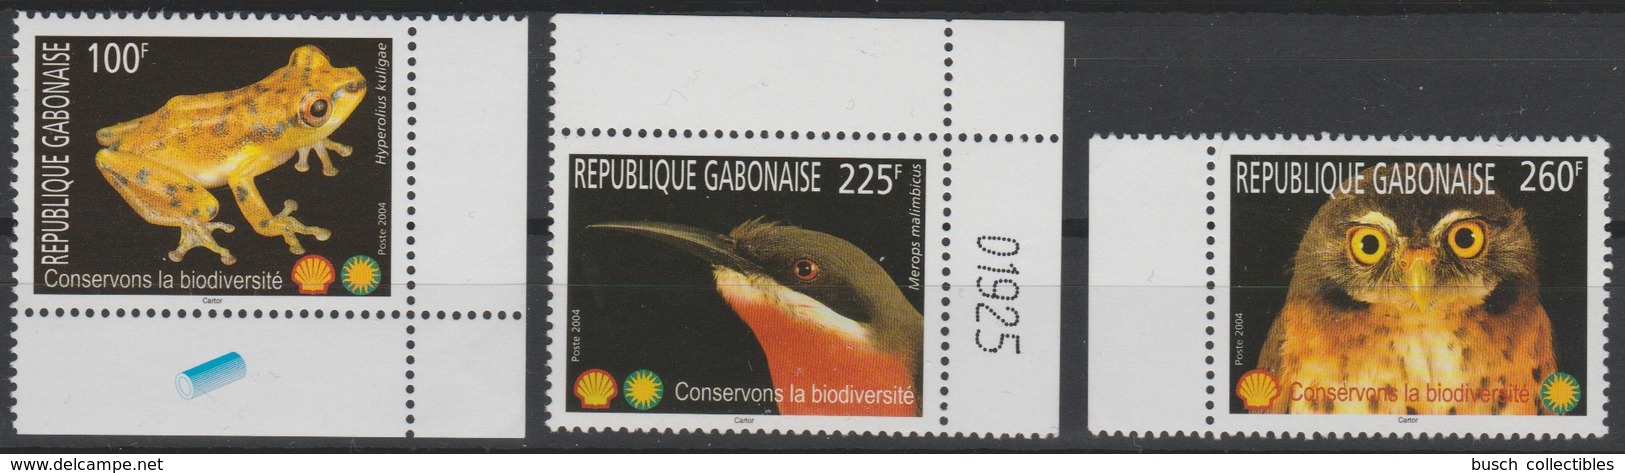 Gabon Gabun 2004 Mi. 1673 1675 1676 Conservons La Biodiversité Faune Fauna Bird Owl Reptile ULTRA Scarce  MNH** - Gabon